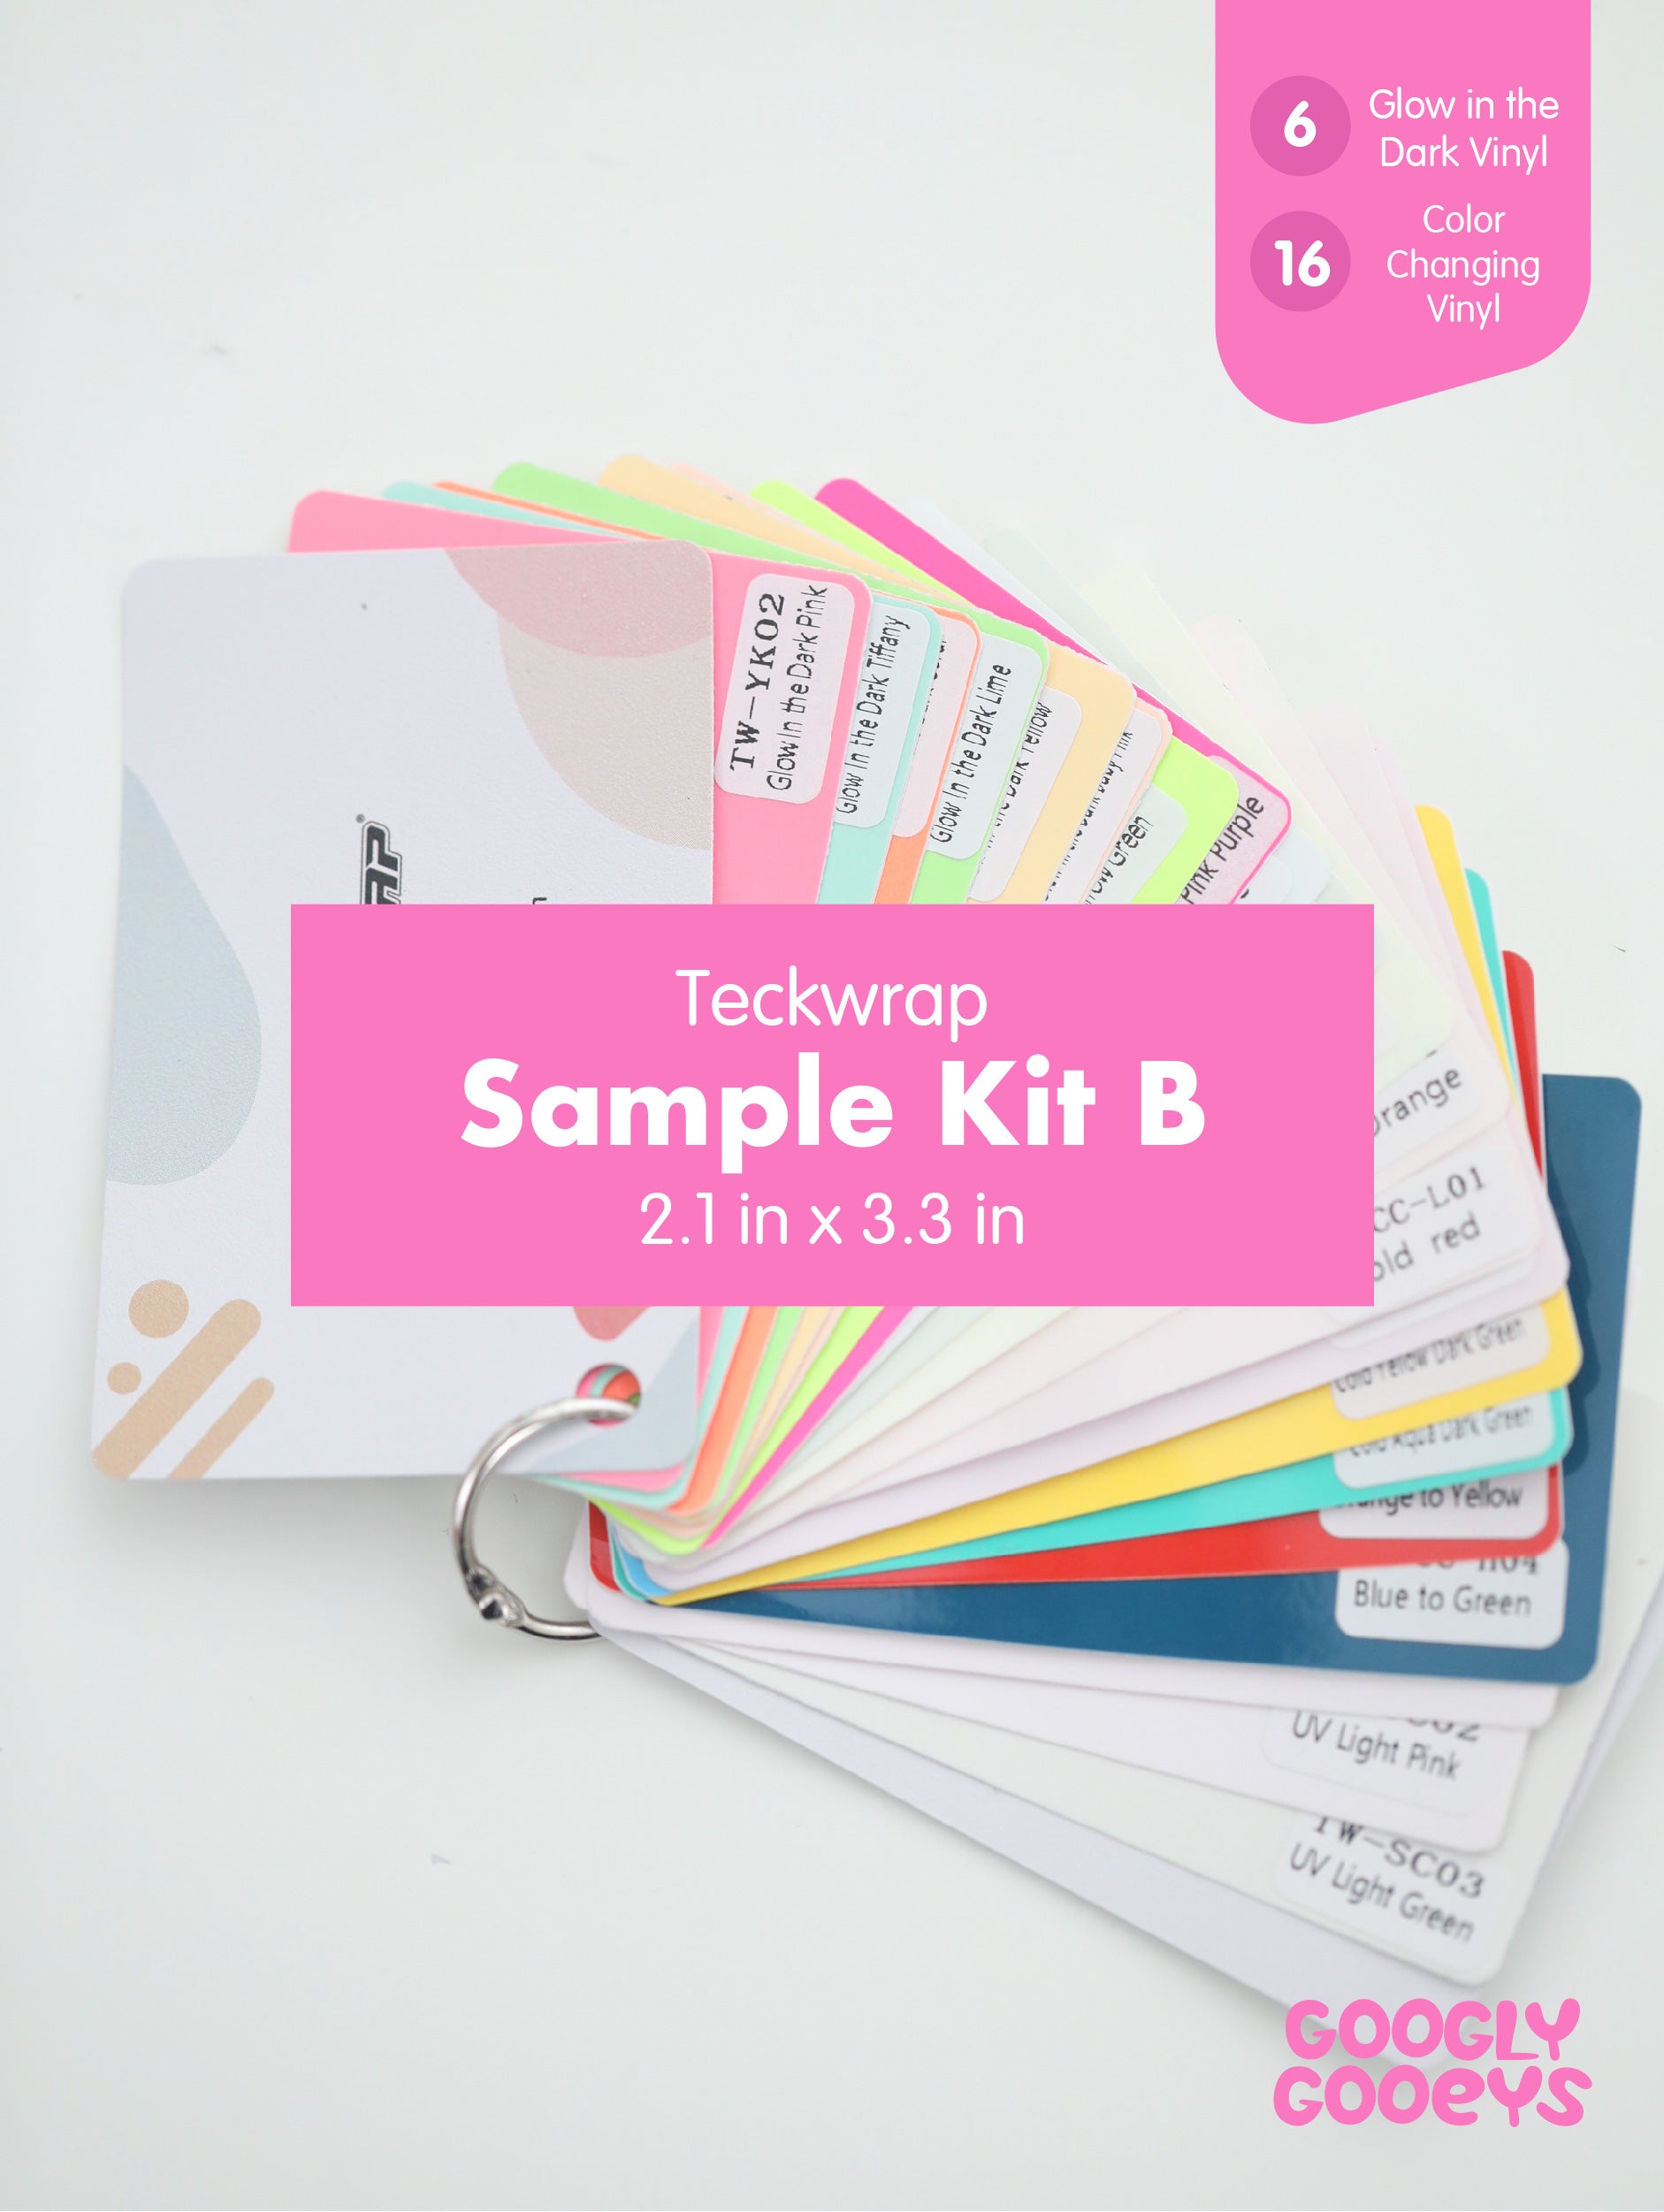 Teckwrap Swatches Vinyl Sticker Sample Kit